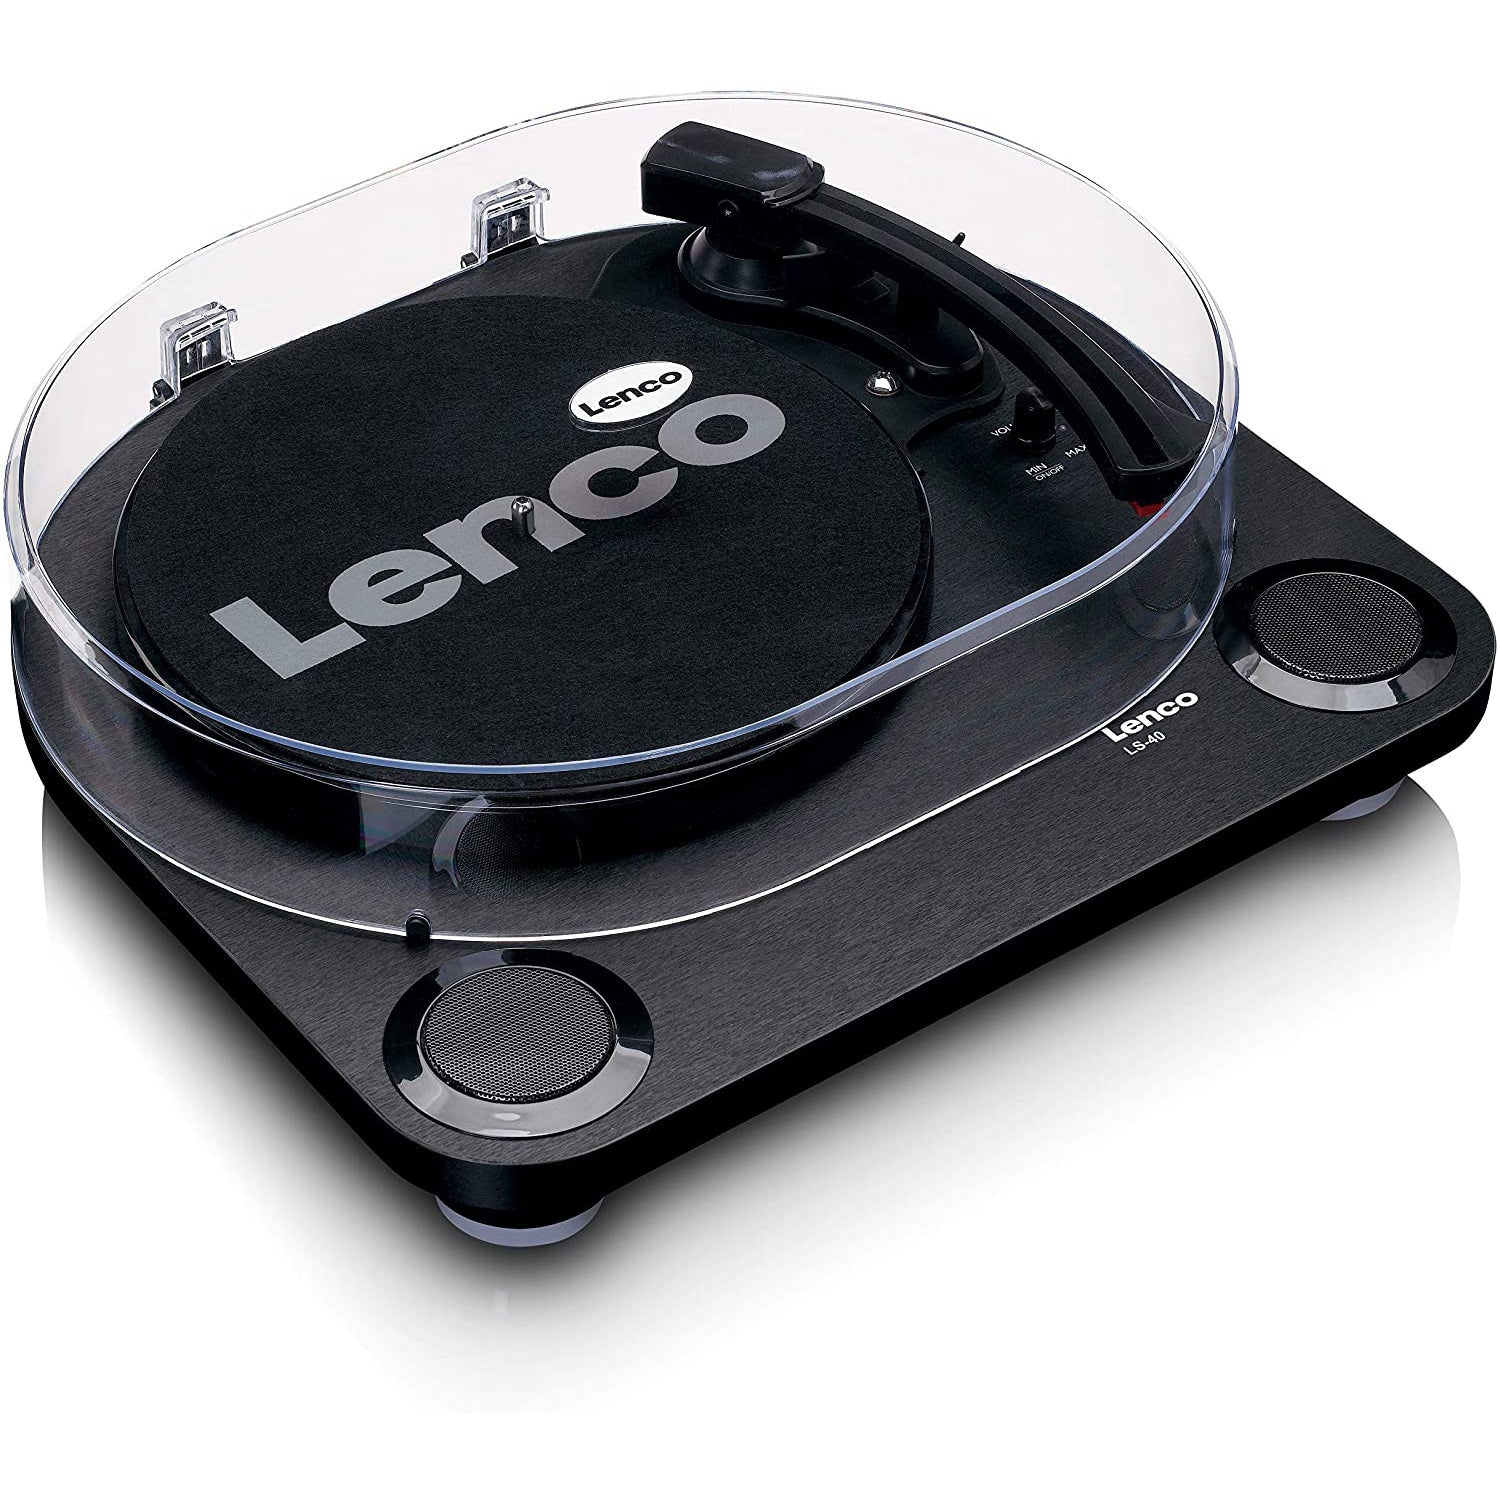 Lenco LS-40BK Turntable With Built-in Speakers, Black